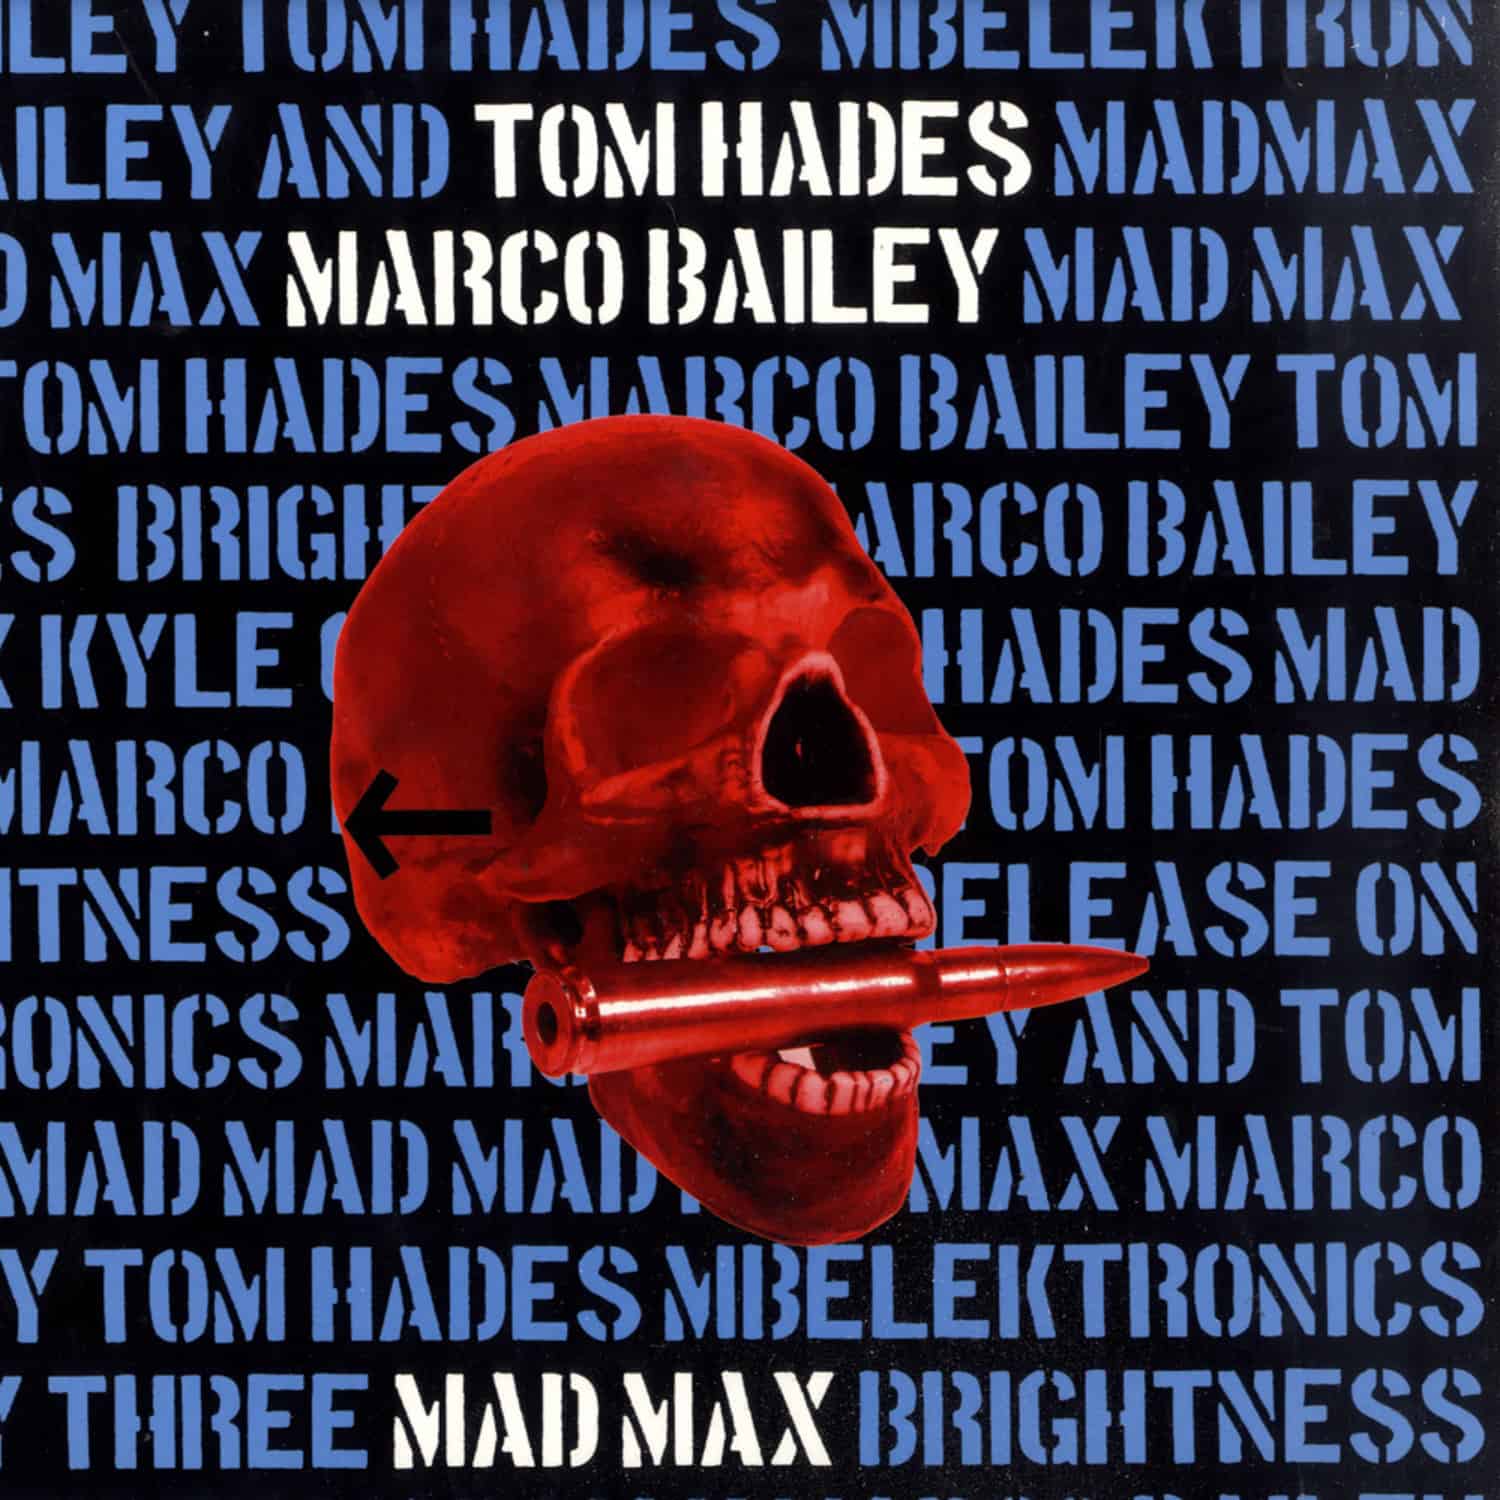 Marco Bailey & Tom Hades - MAD MAX